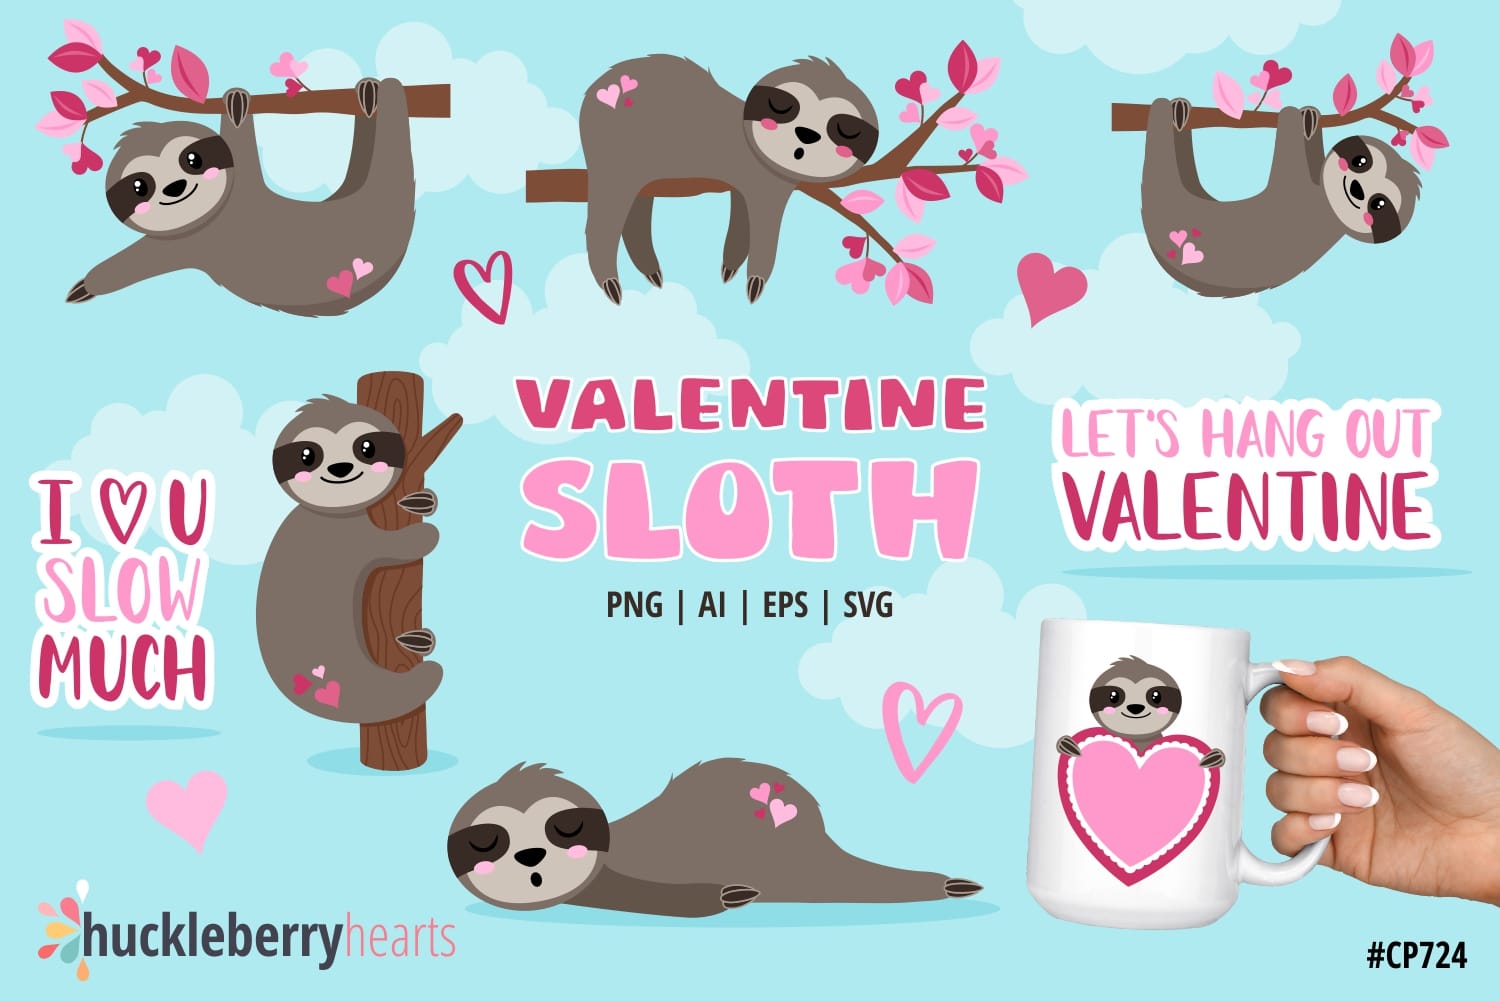 Valentine's Day Sloth Clipart Set